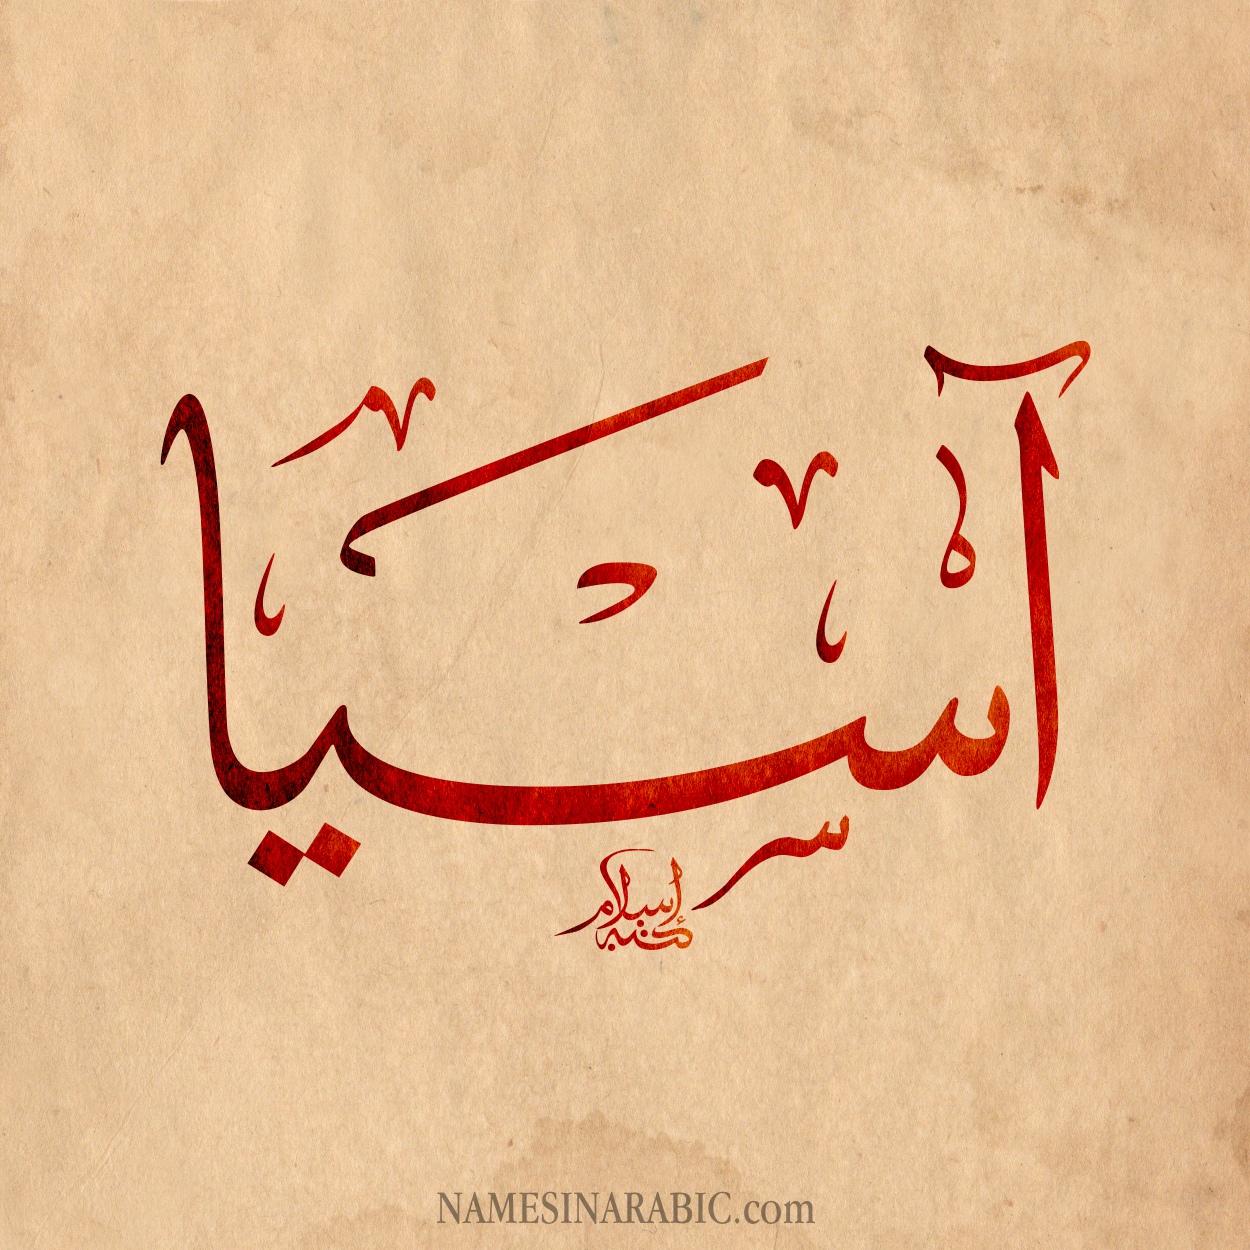 Asia-Name-in-Arabic-Calligraphy.jpg